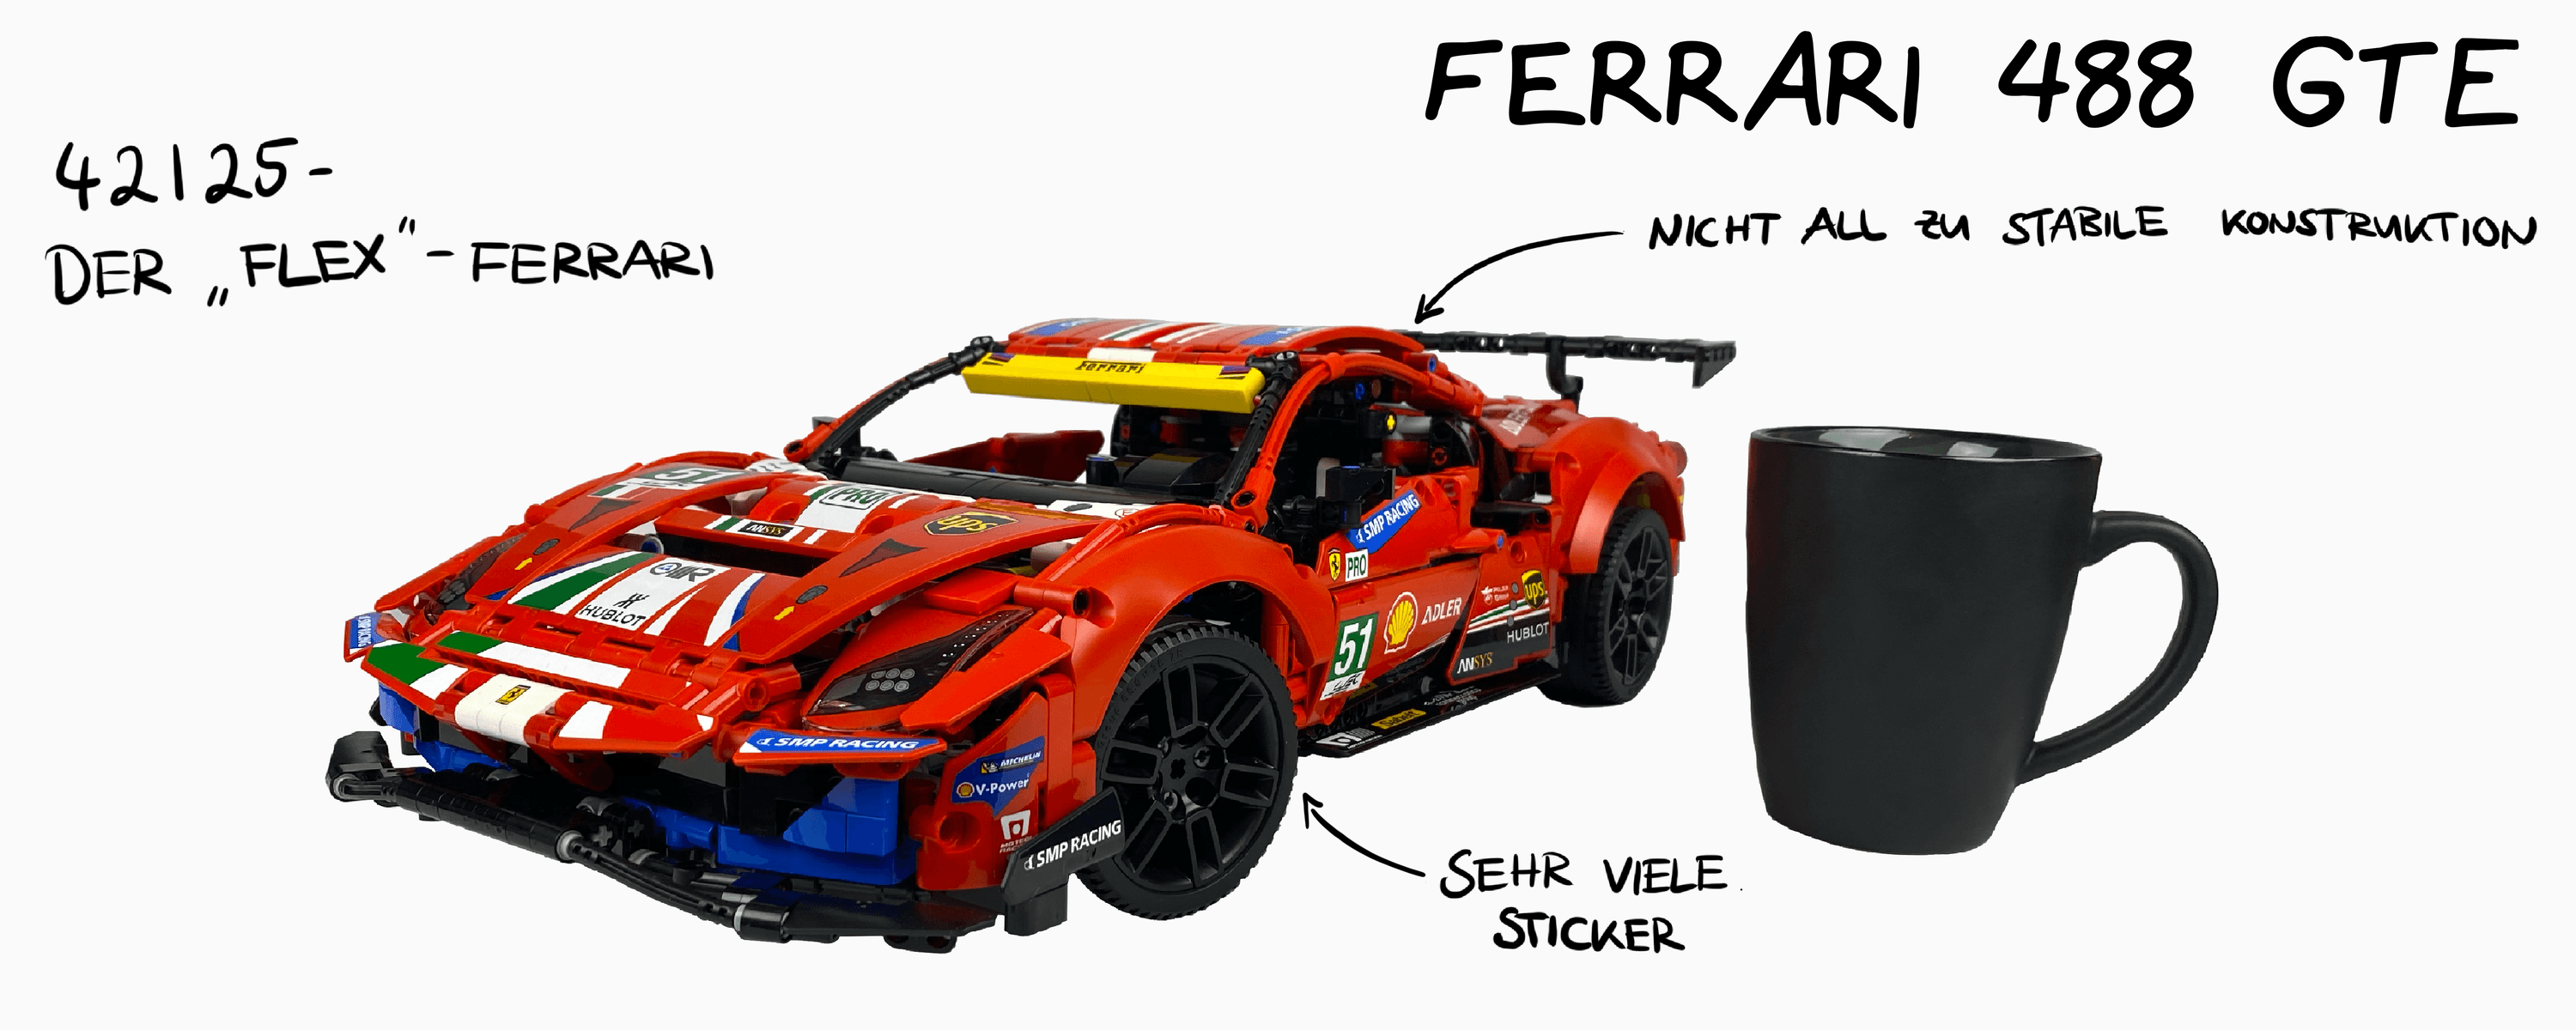 Lego - Ferrari 488 GTE “AF Corse #51” #42125